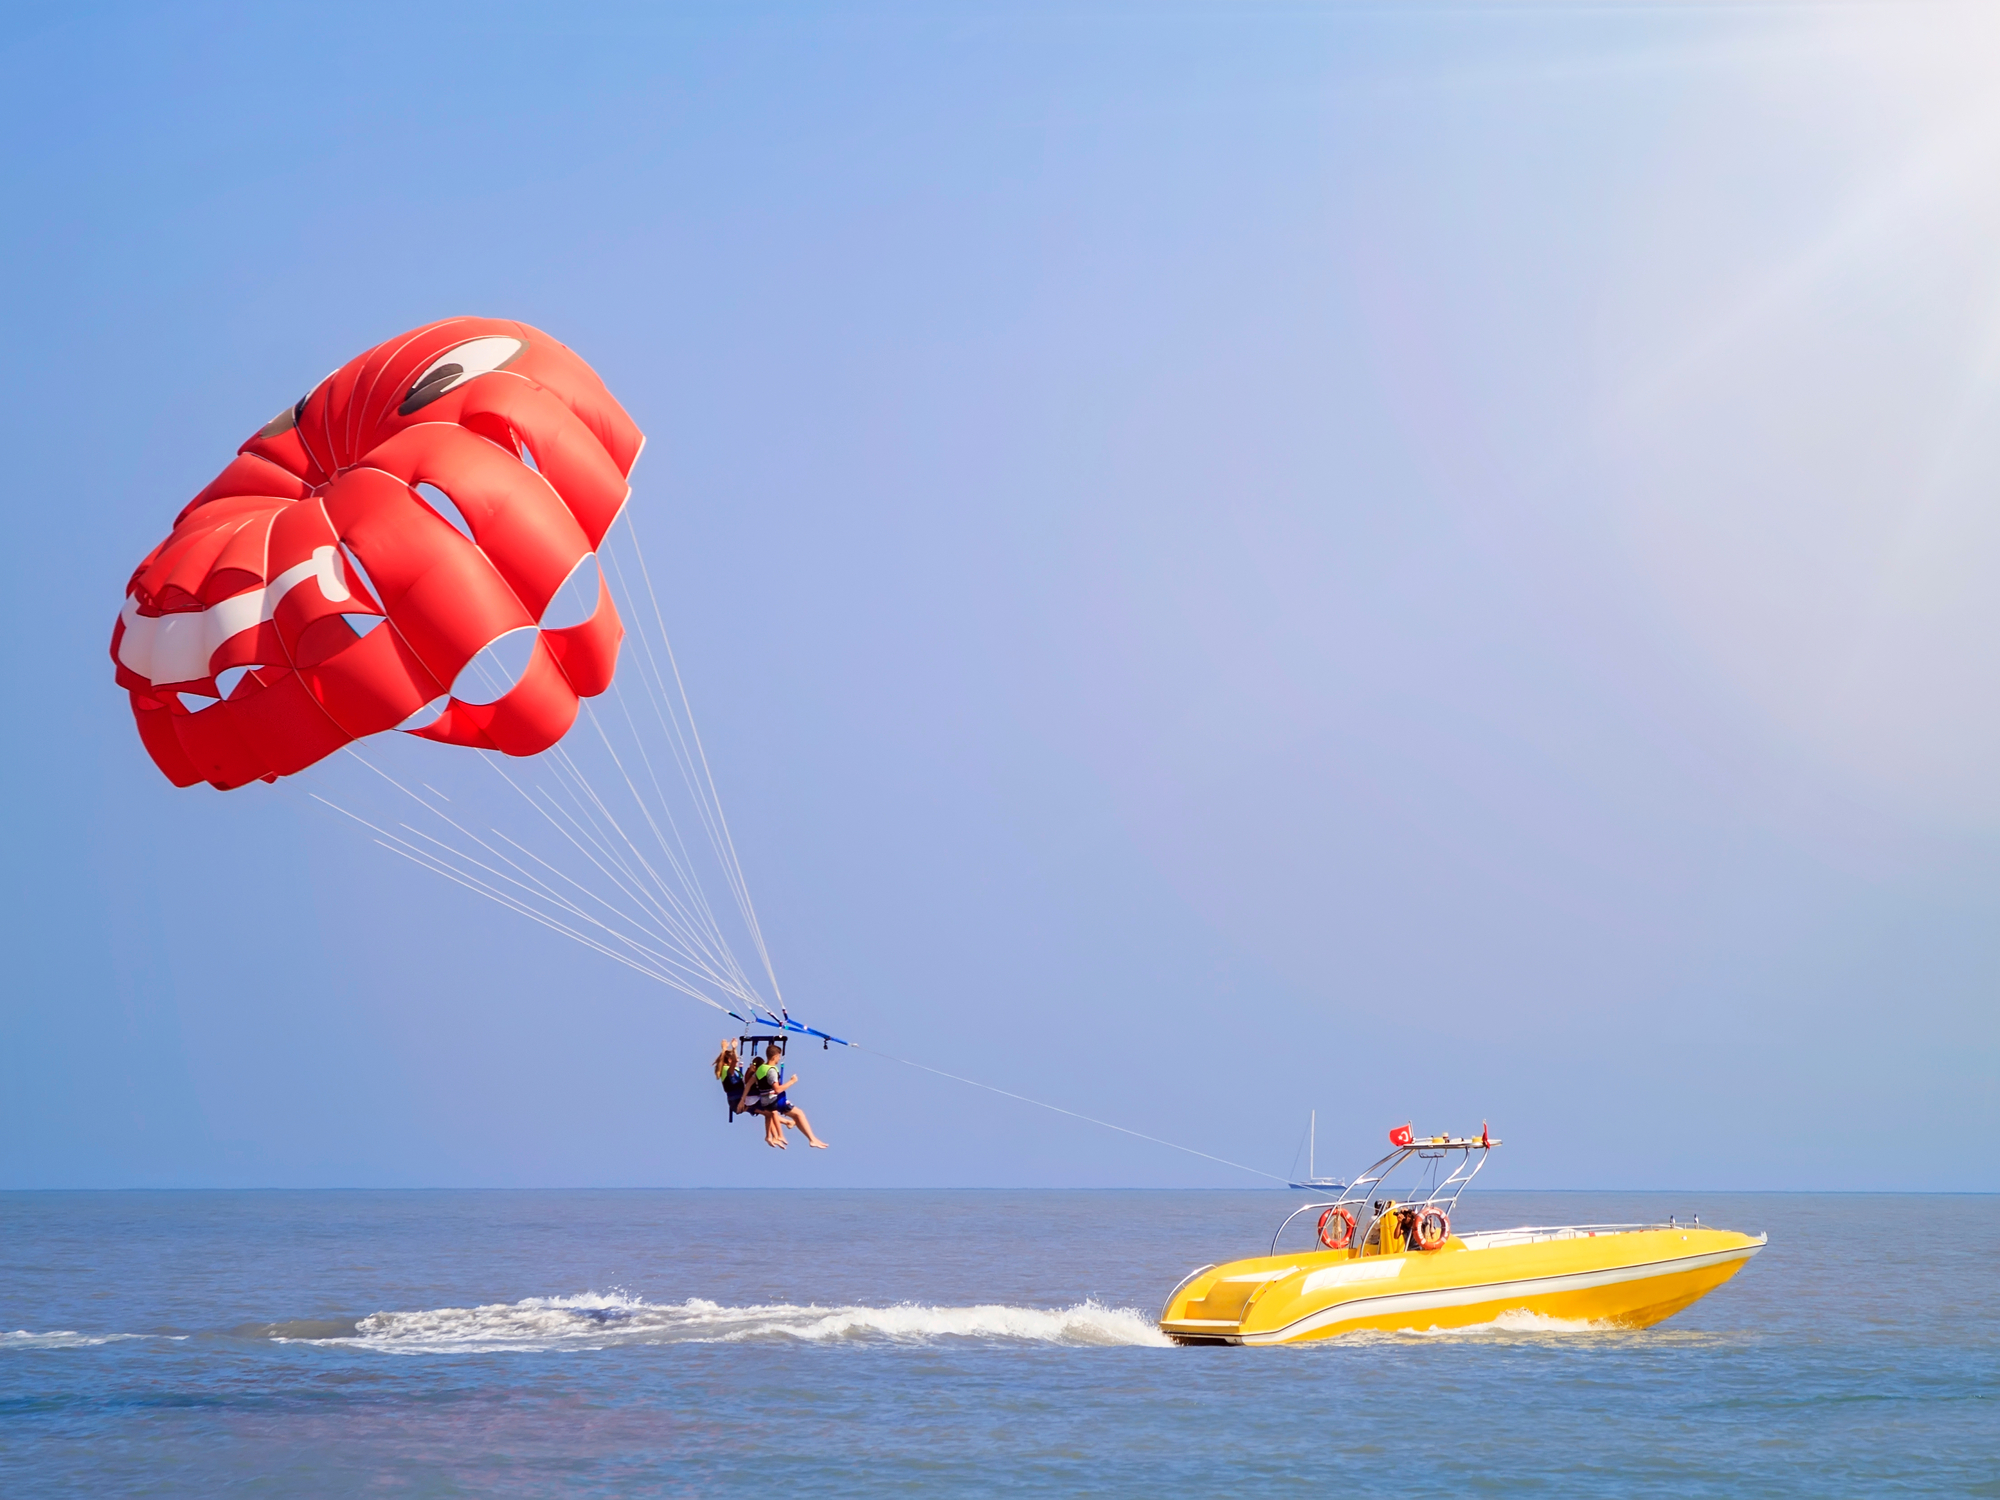 Setting sail! Kerala's first parasailing project unveiled at Kovalam